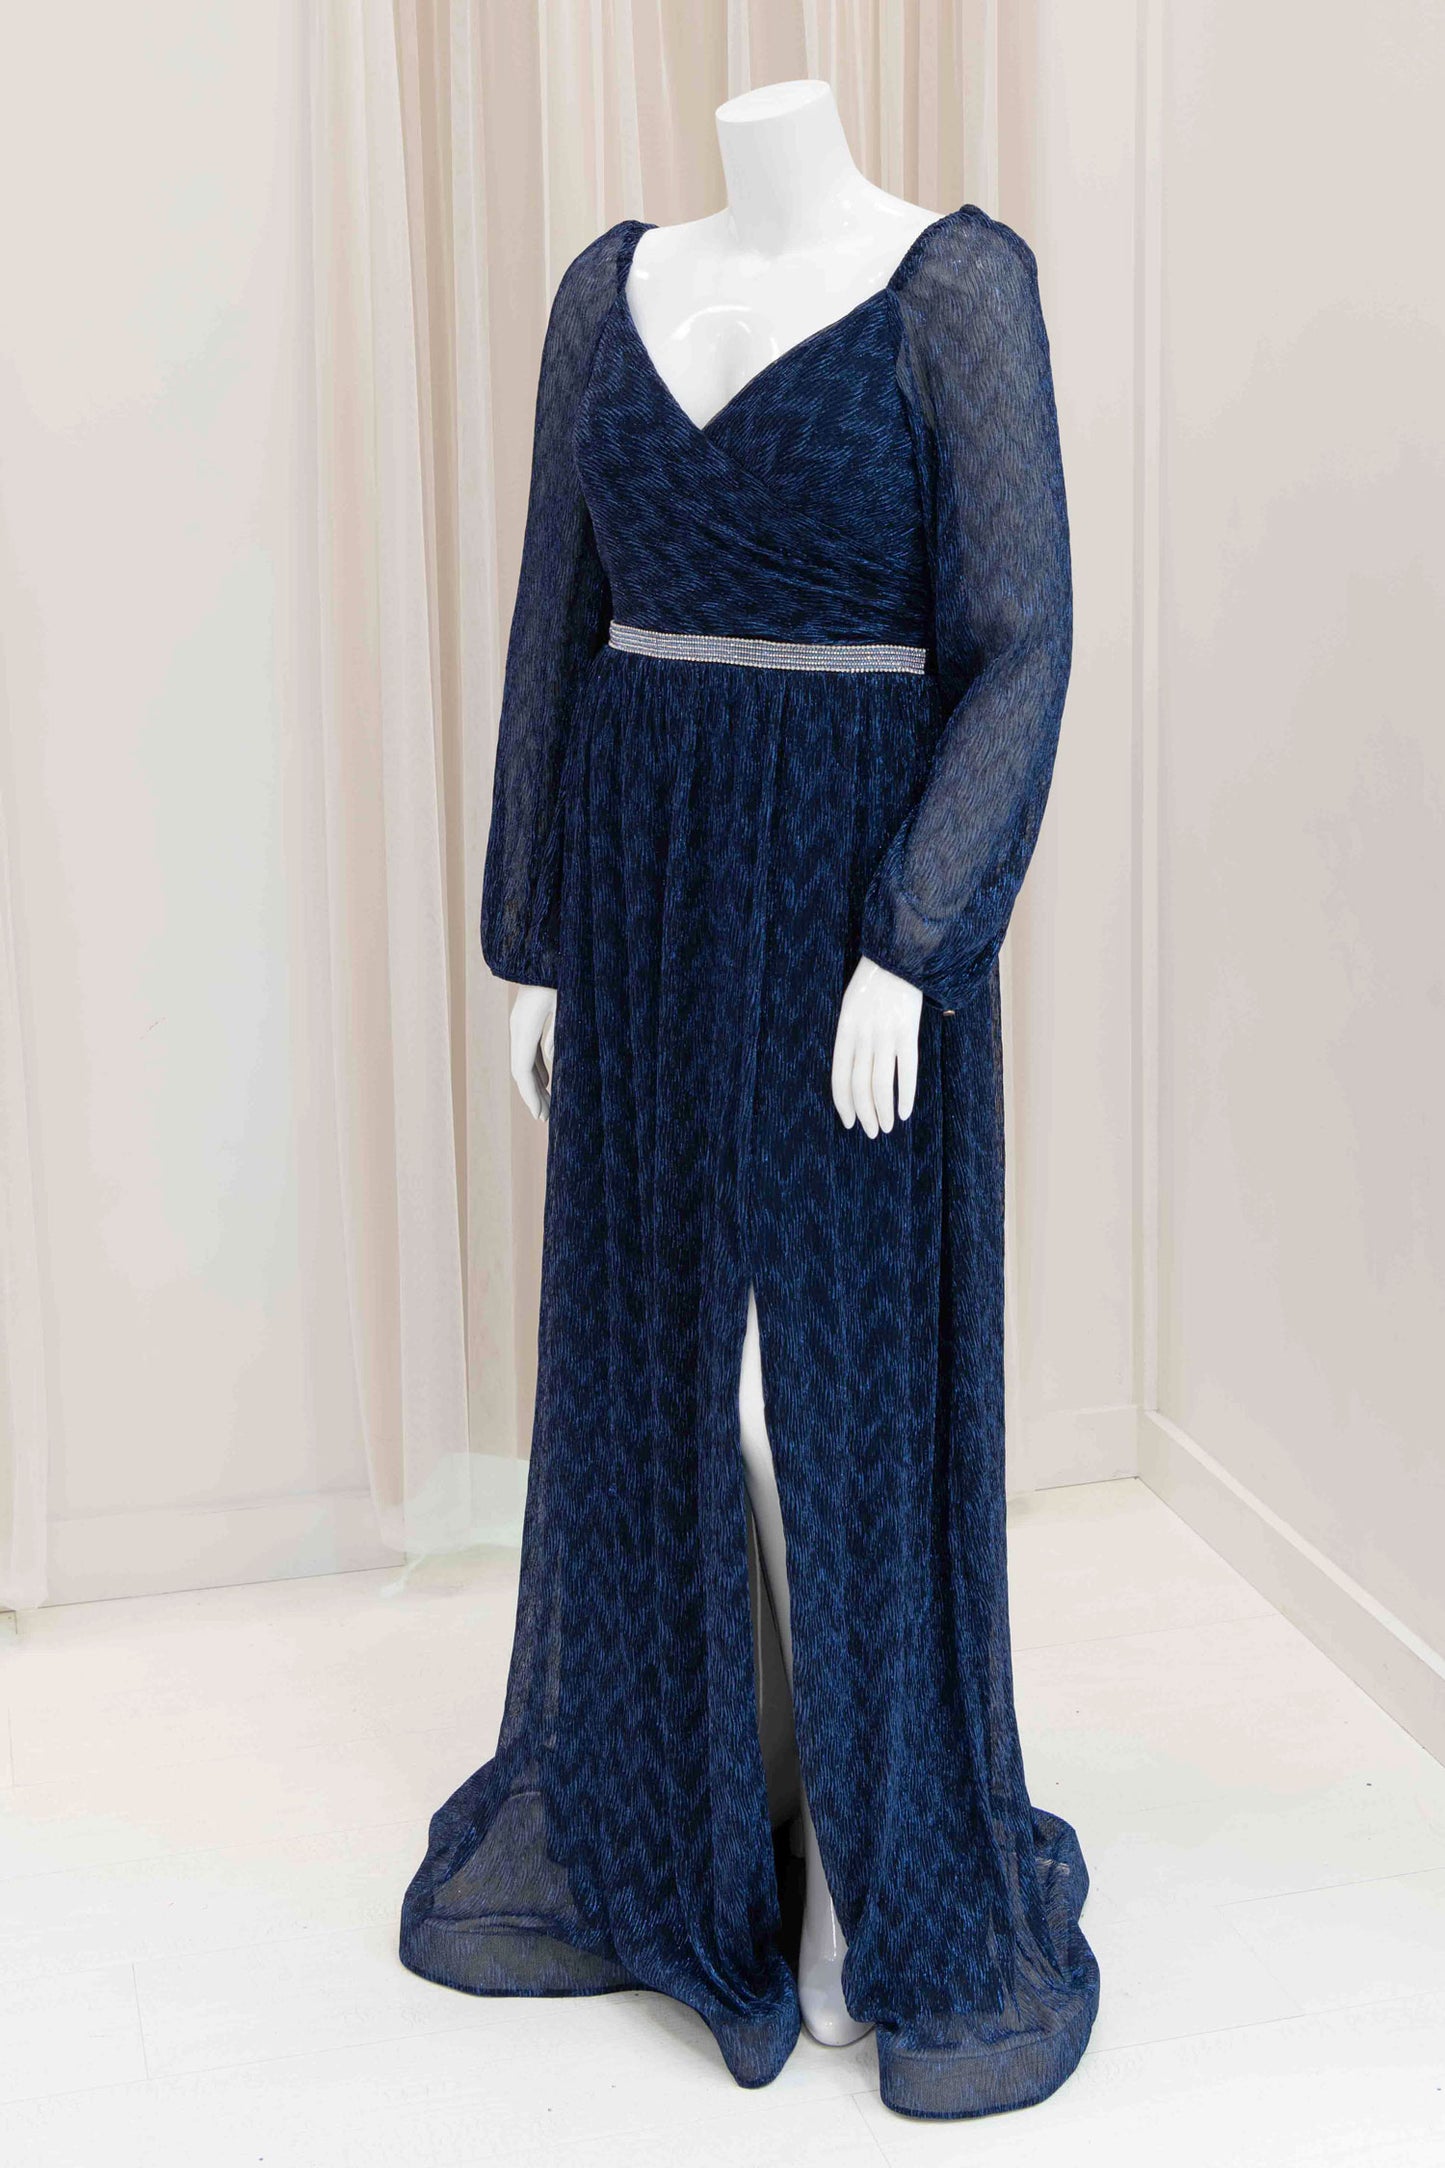 Gillian Lurex Maxi Dress in Navy Blue